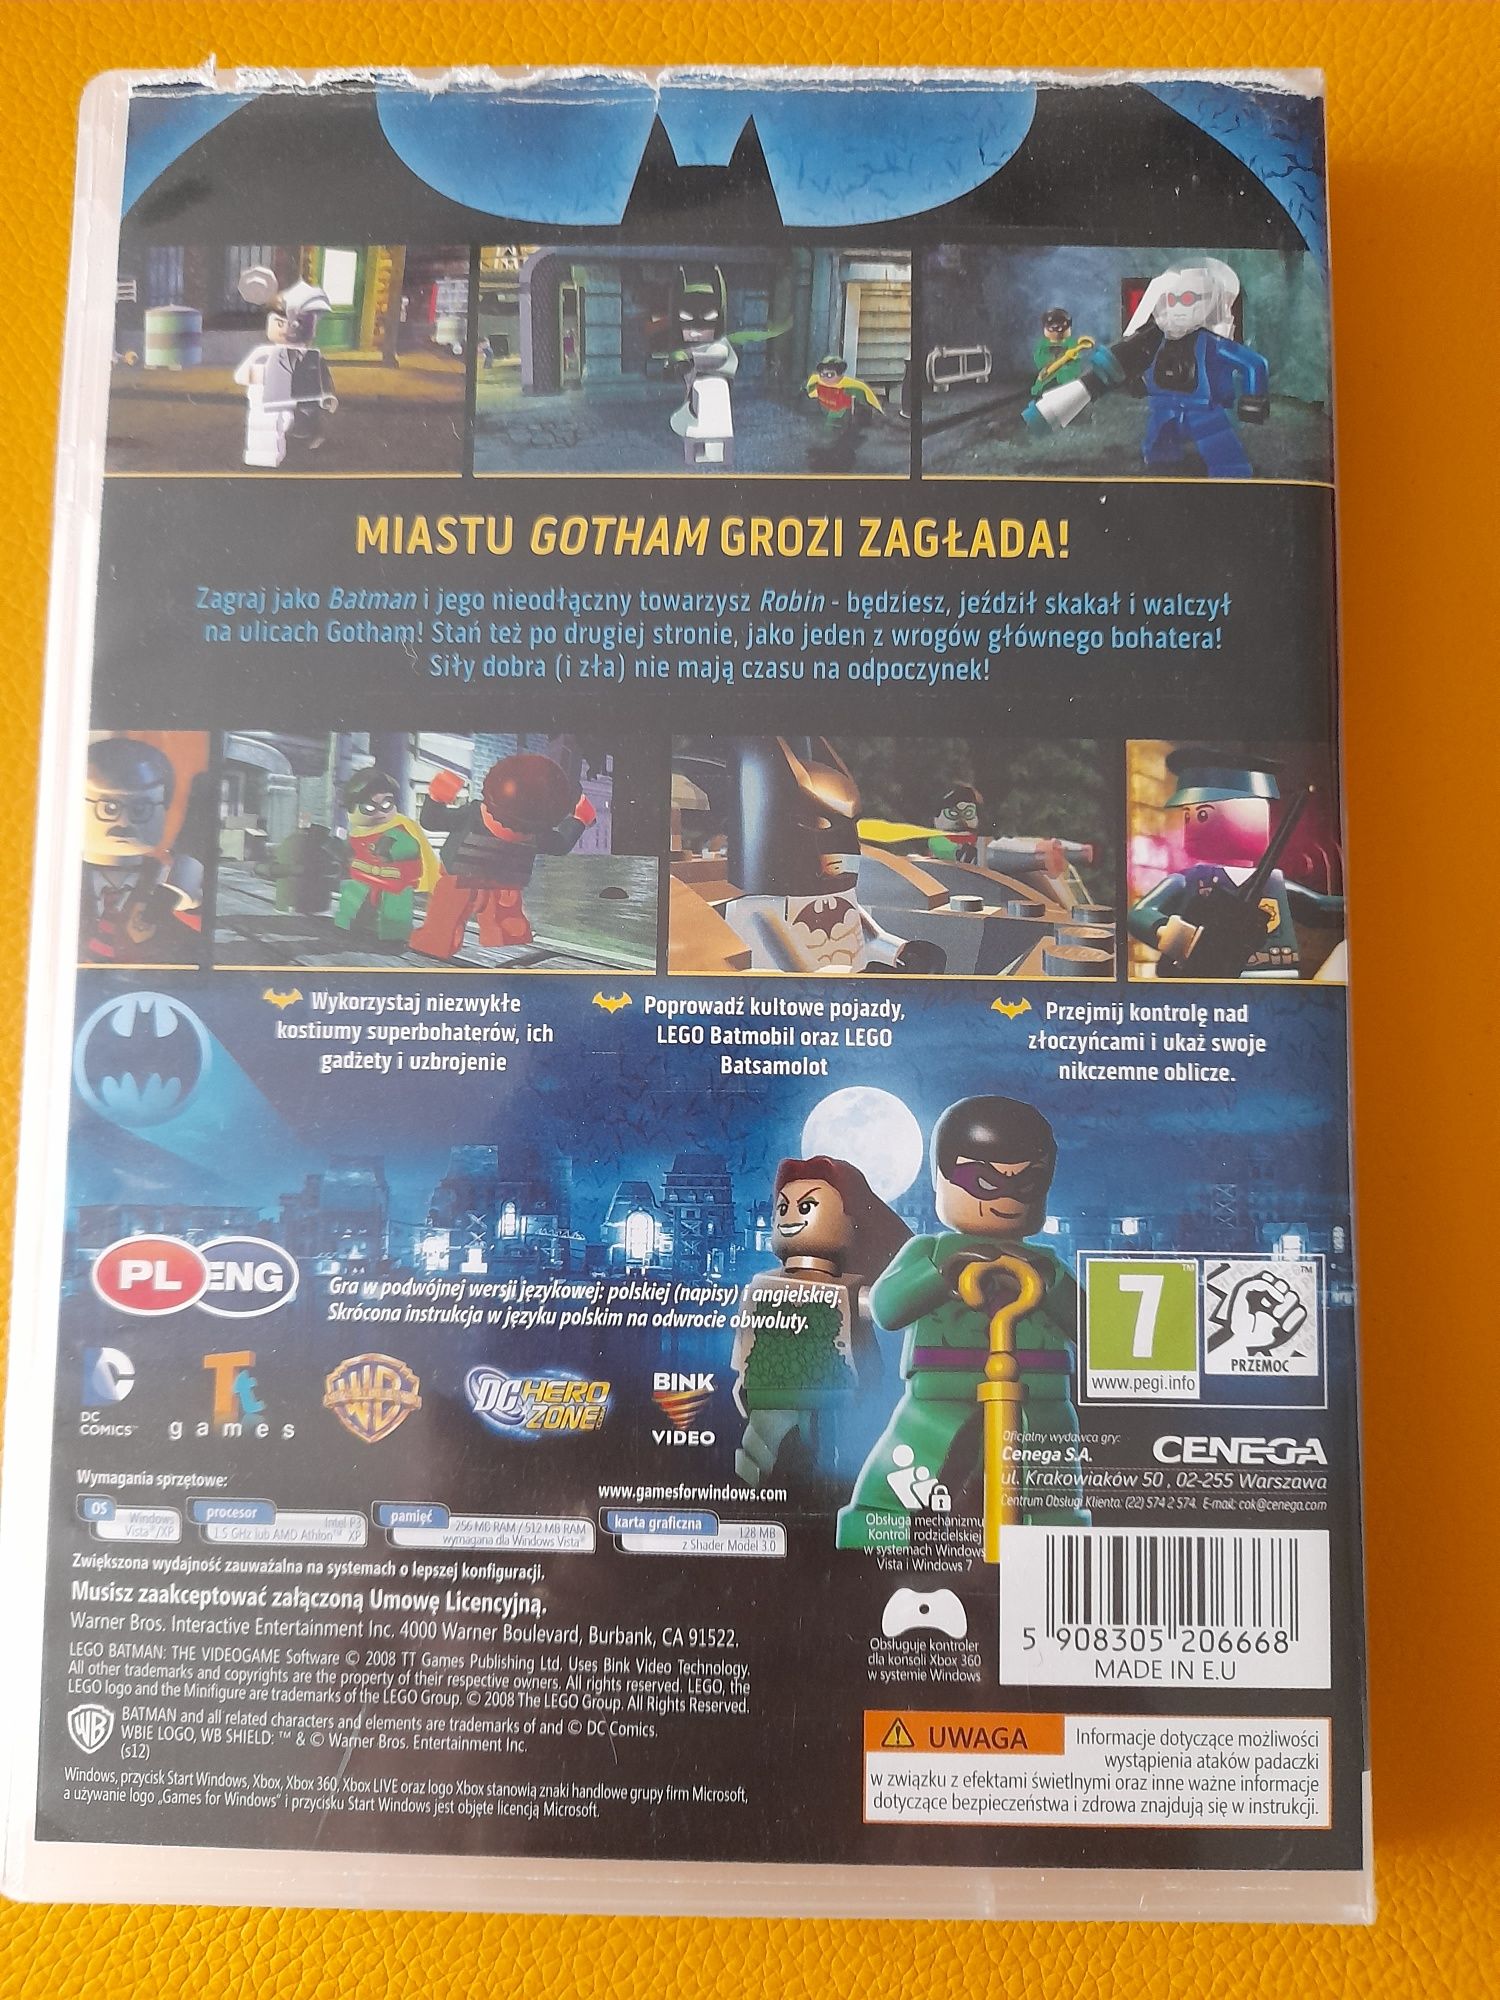 Lego Batman Windows PC